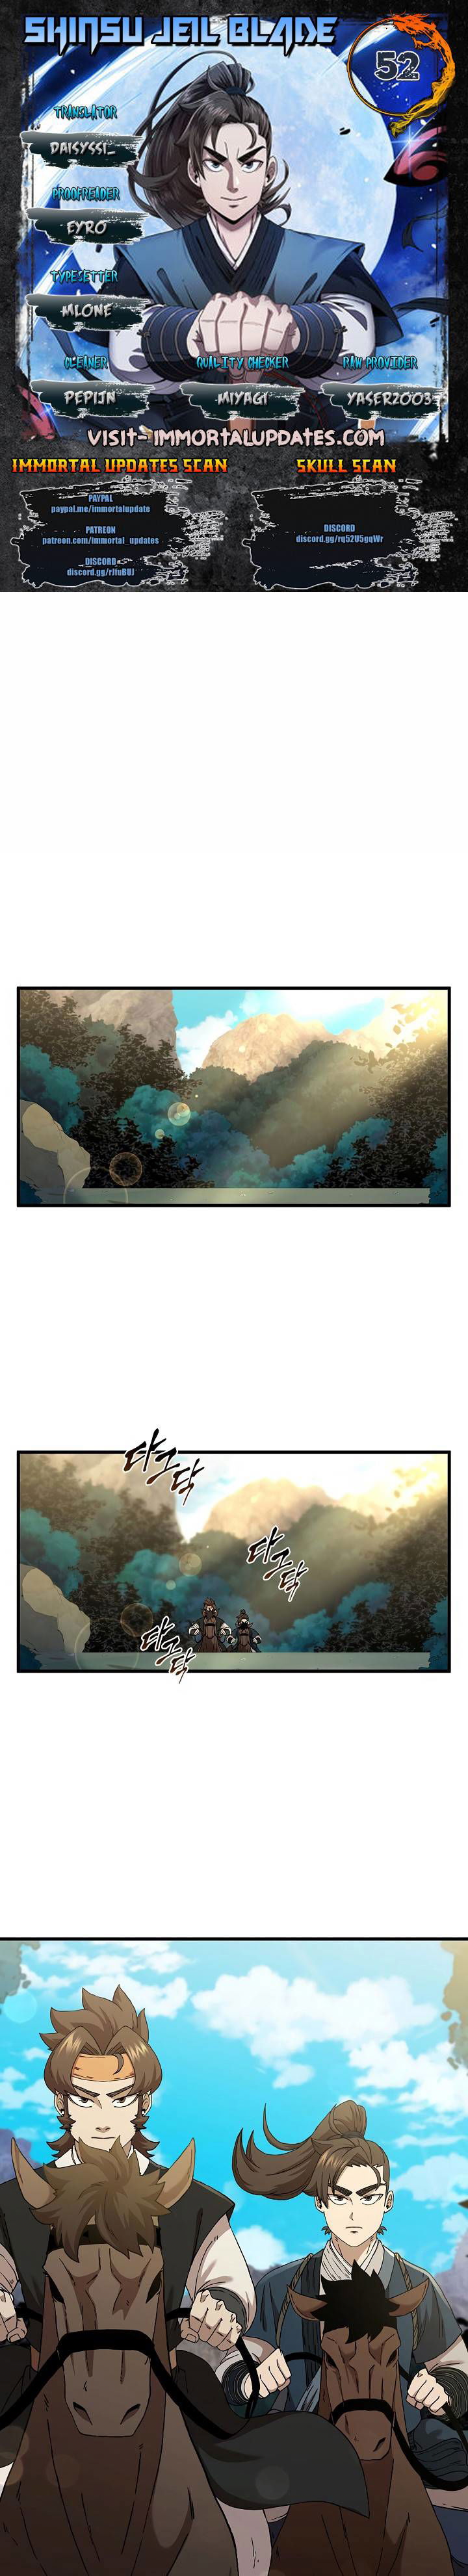 Shinsu Jeil Sword Chapter 52 page 1